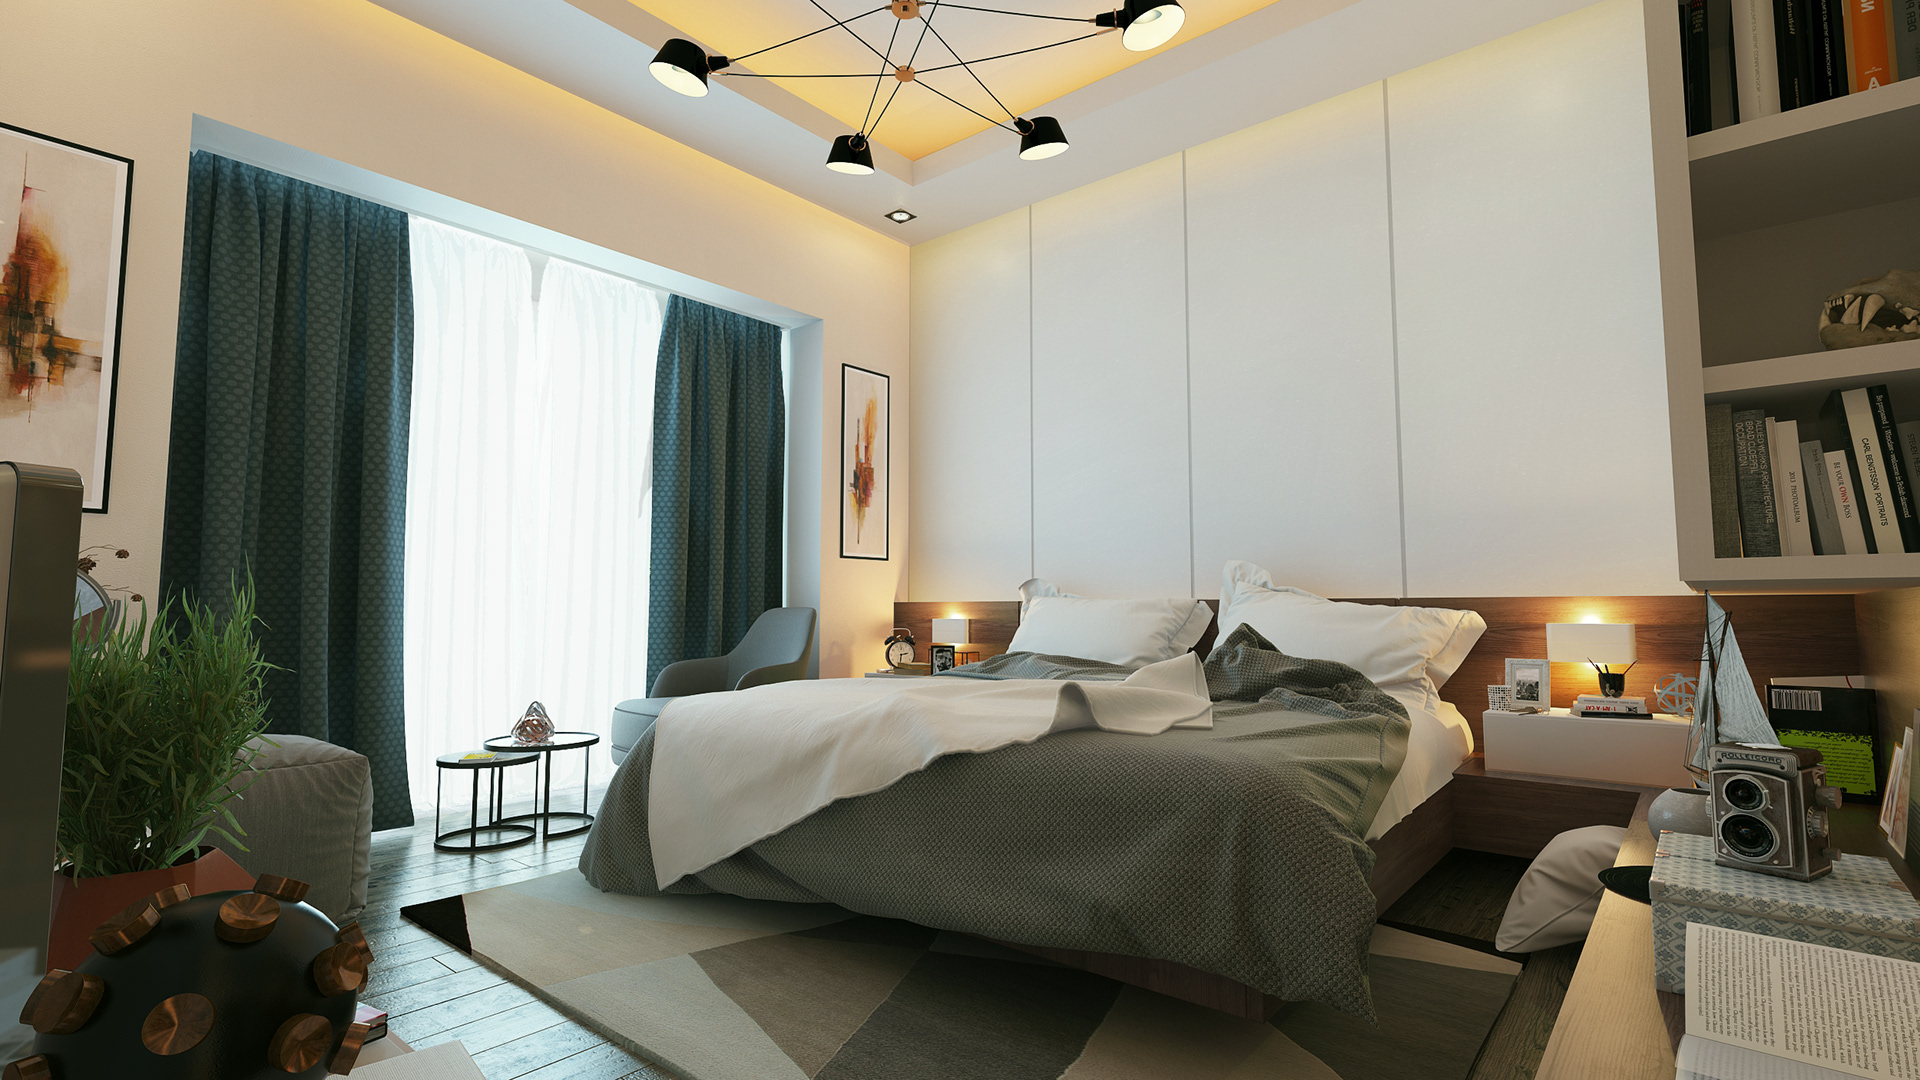 Guest Bedroom Design On Behance